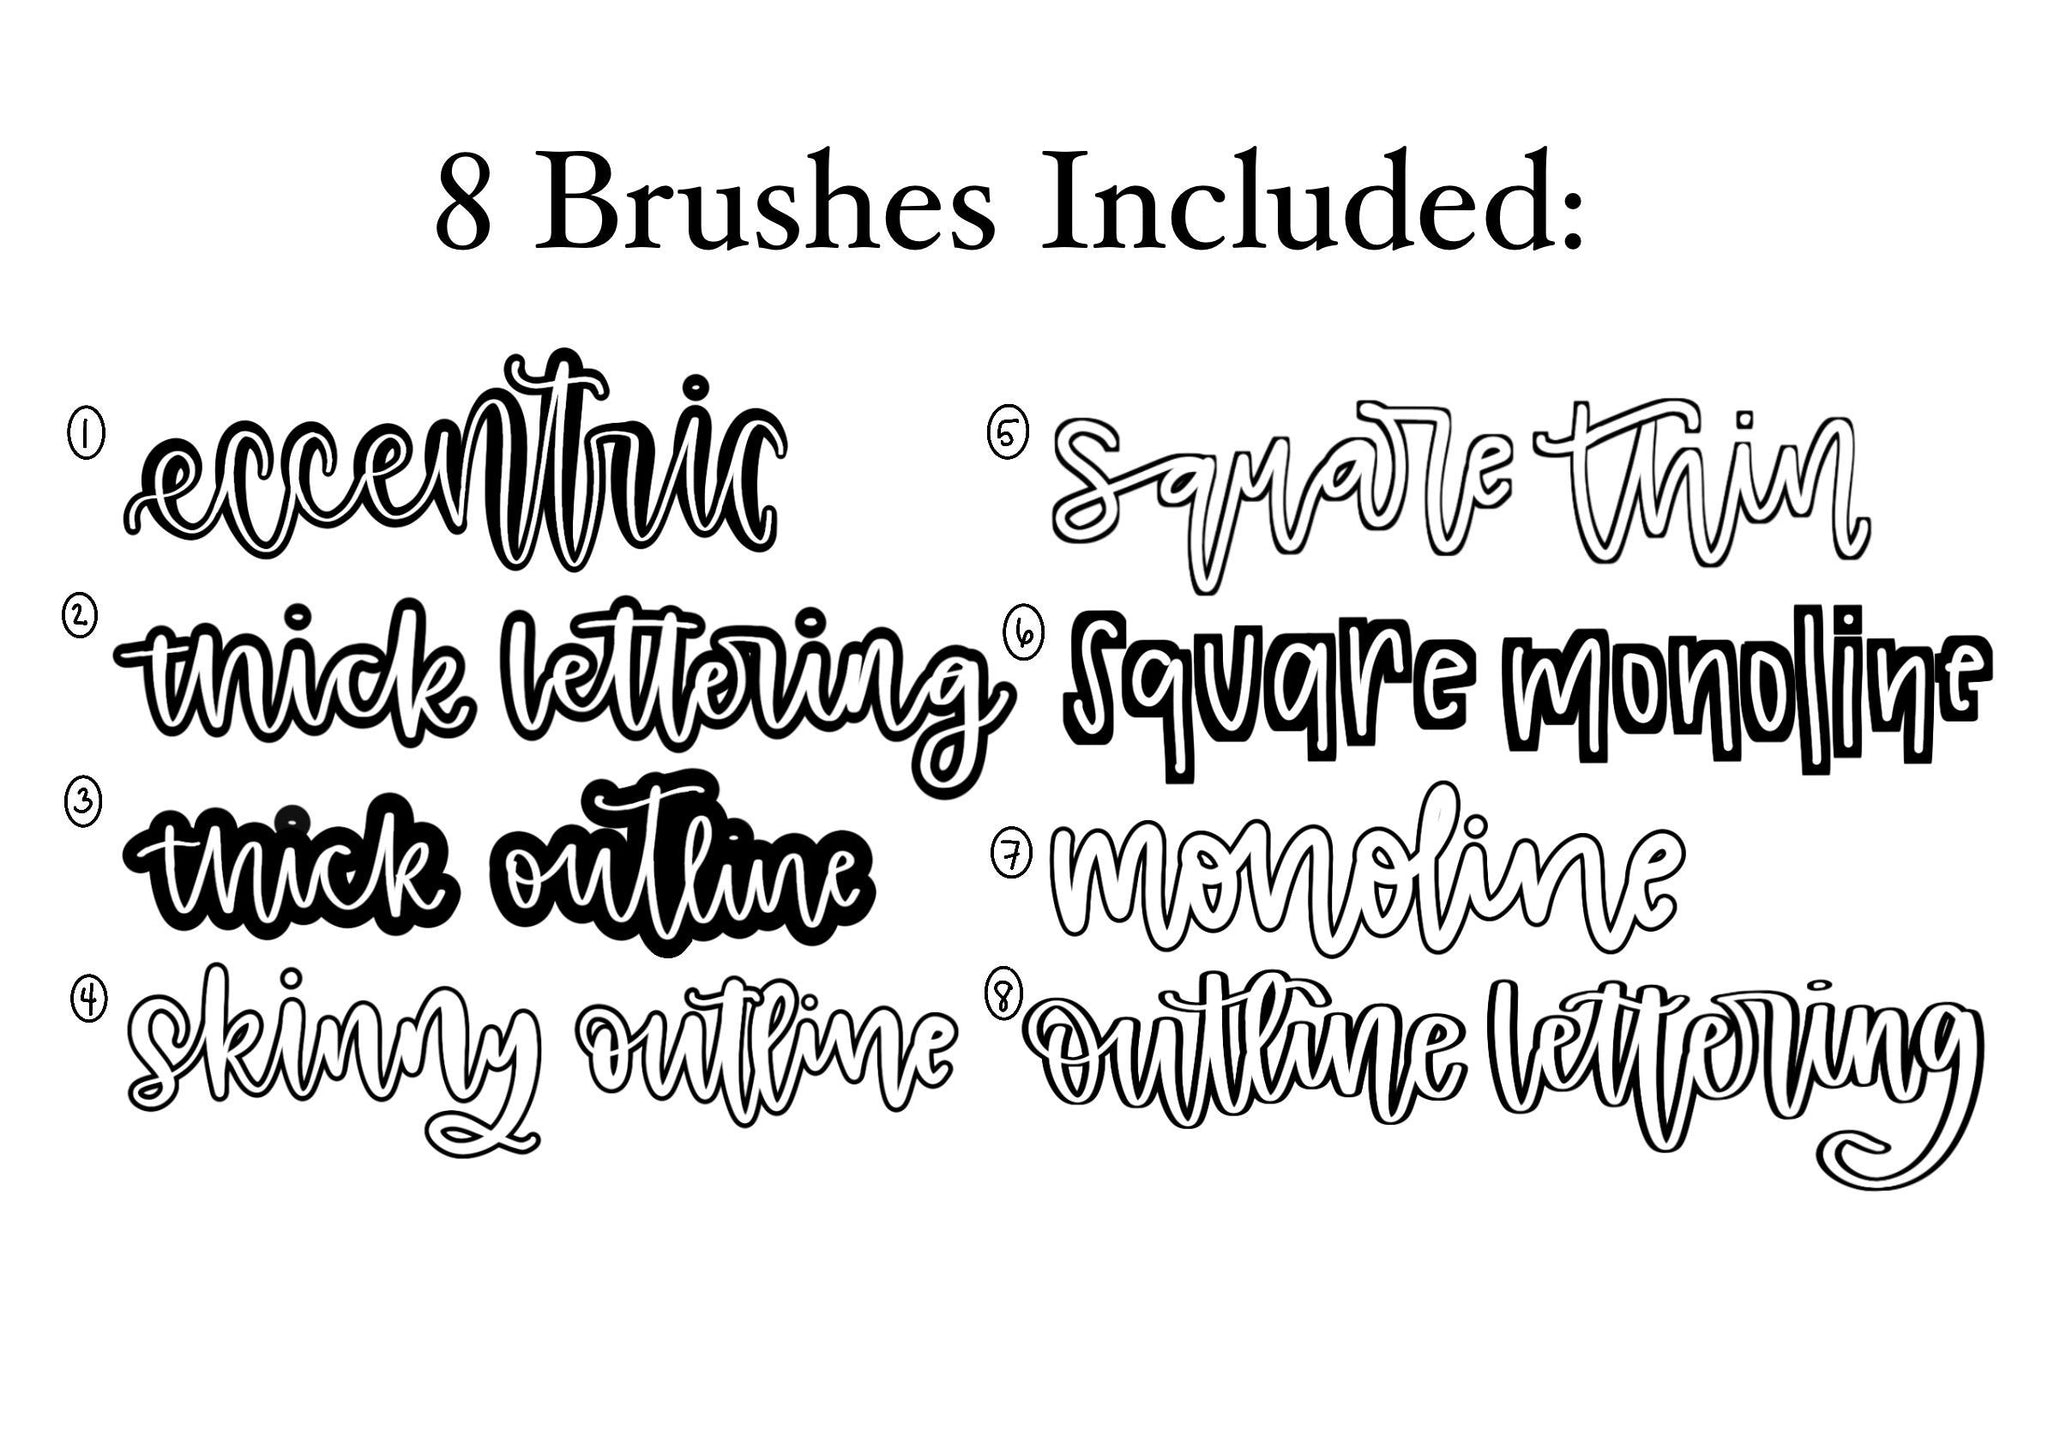 Free outline brush set! - Free Brushes for Procreate